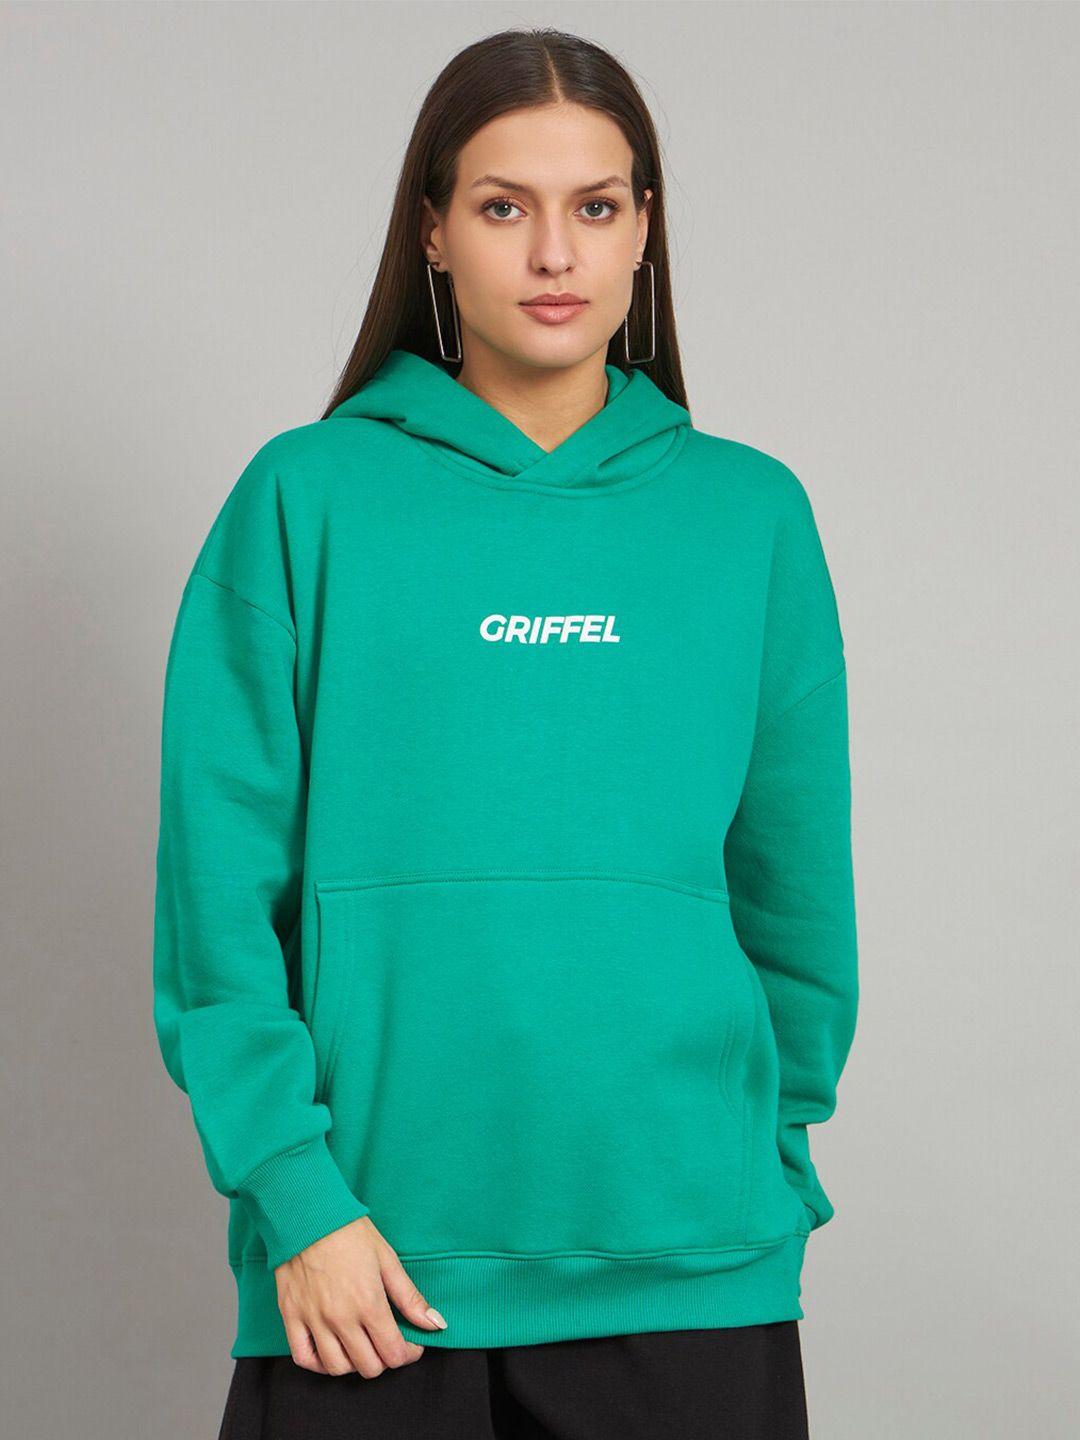 GRIFFEL Brand Logo Printed Hooded Fleece Pullover Sweatshirt